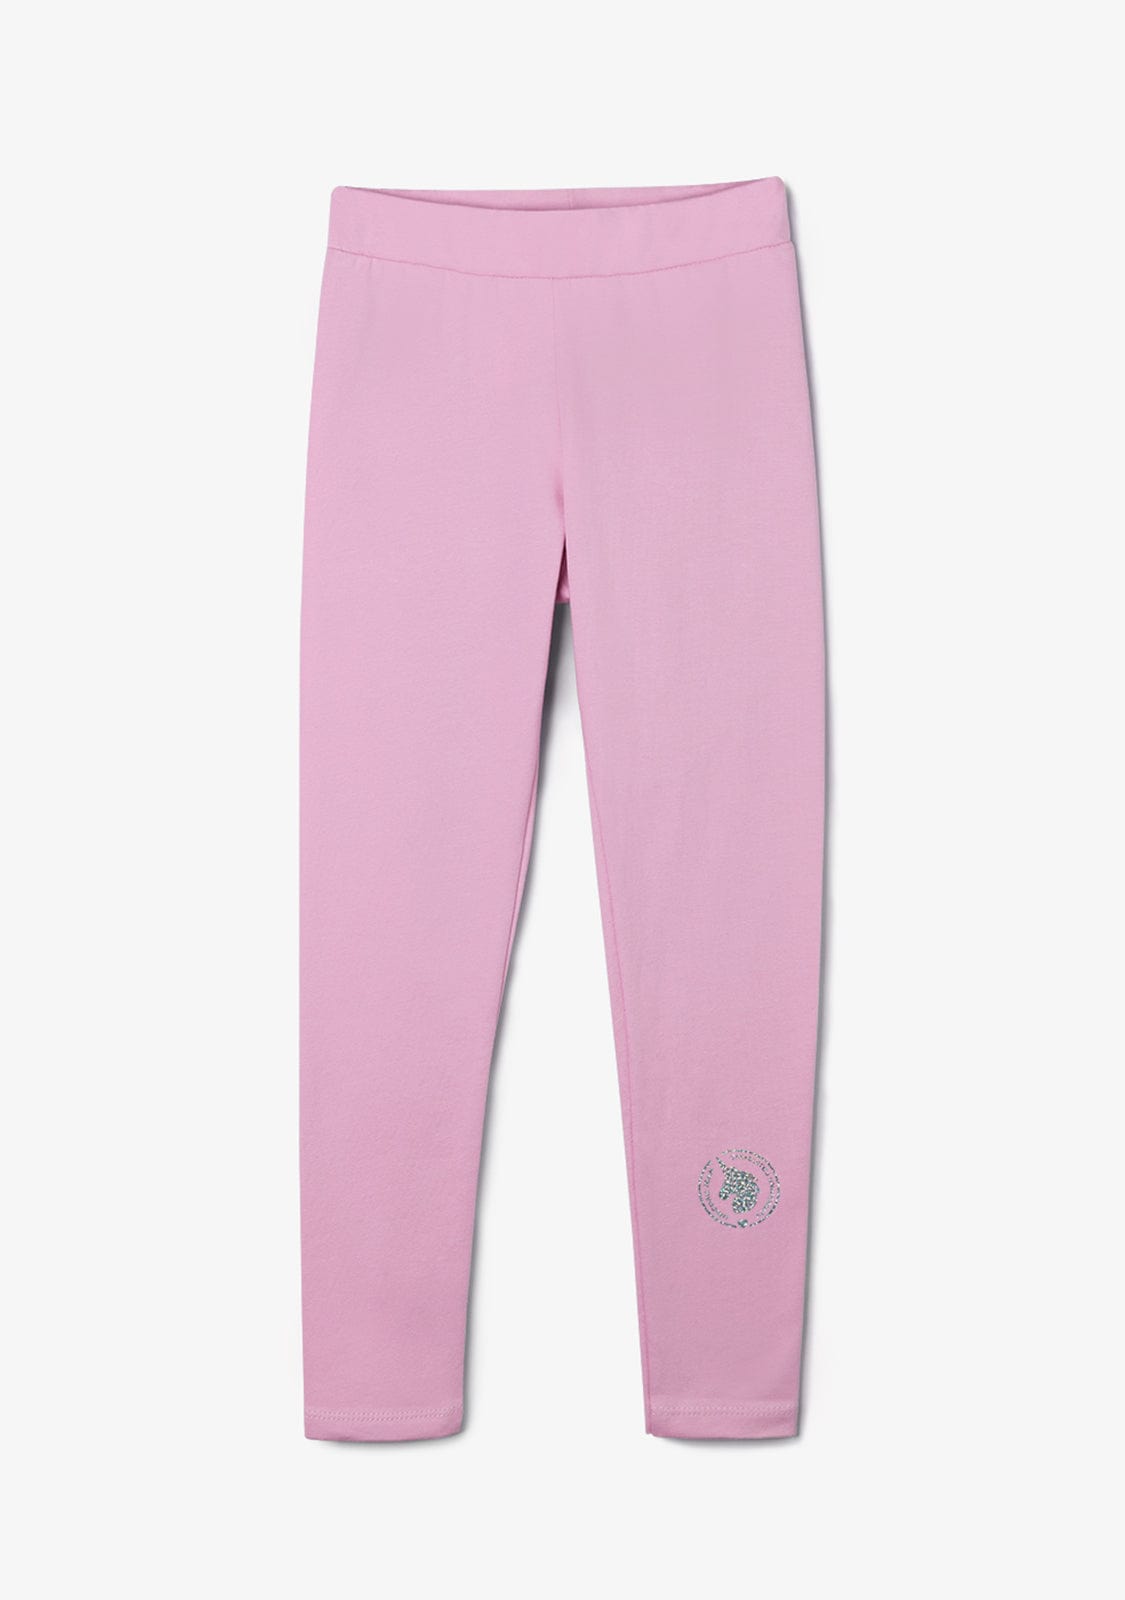 CONGUITOS TEXTIL Clothing Girl's Pink Cotton Leggings